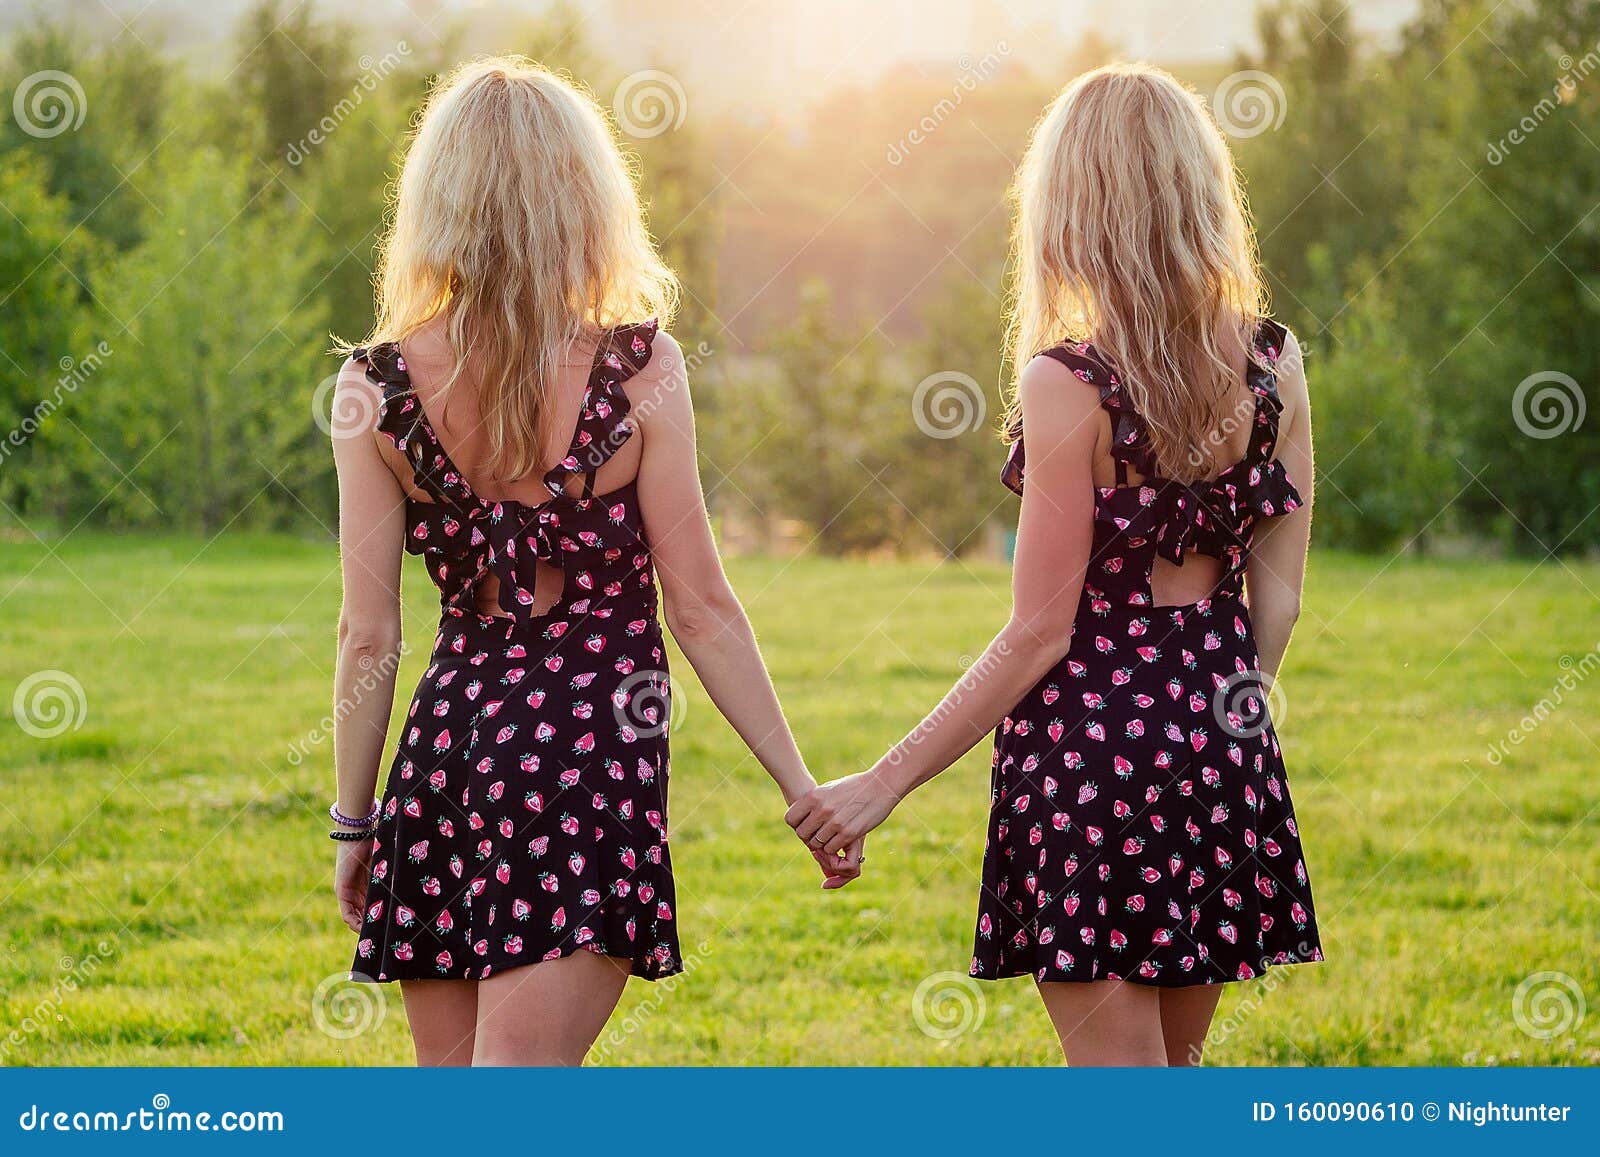 Блондинки и брюнетки лесбиянки обнимают друг друга. проводите время вместе.